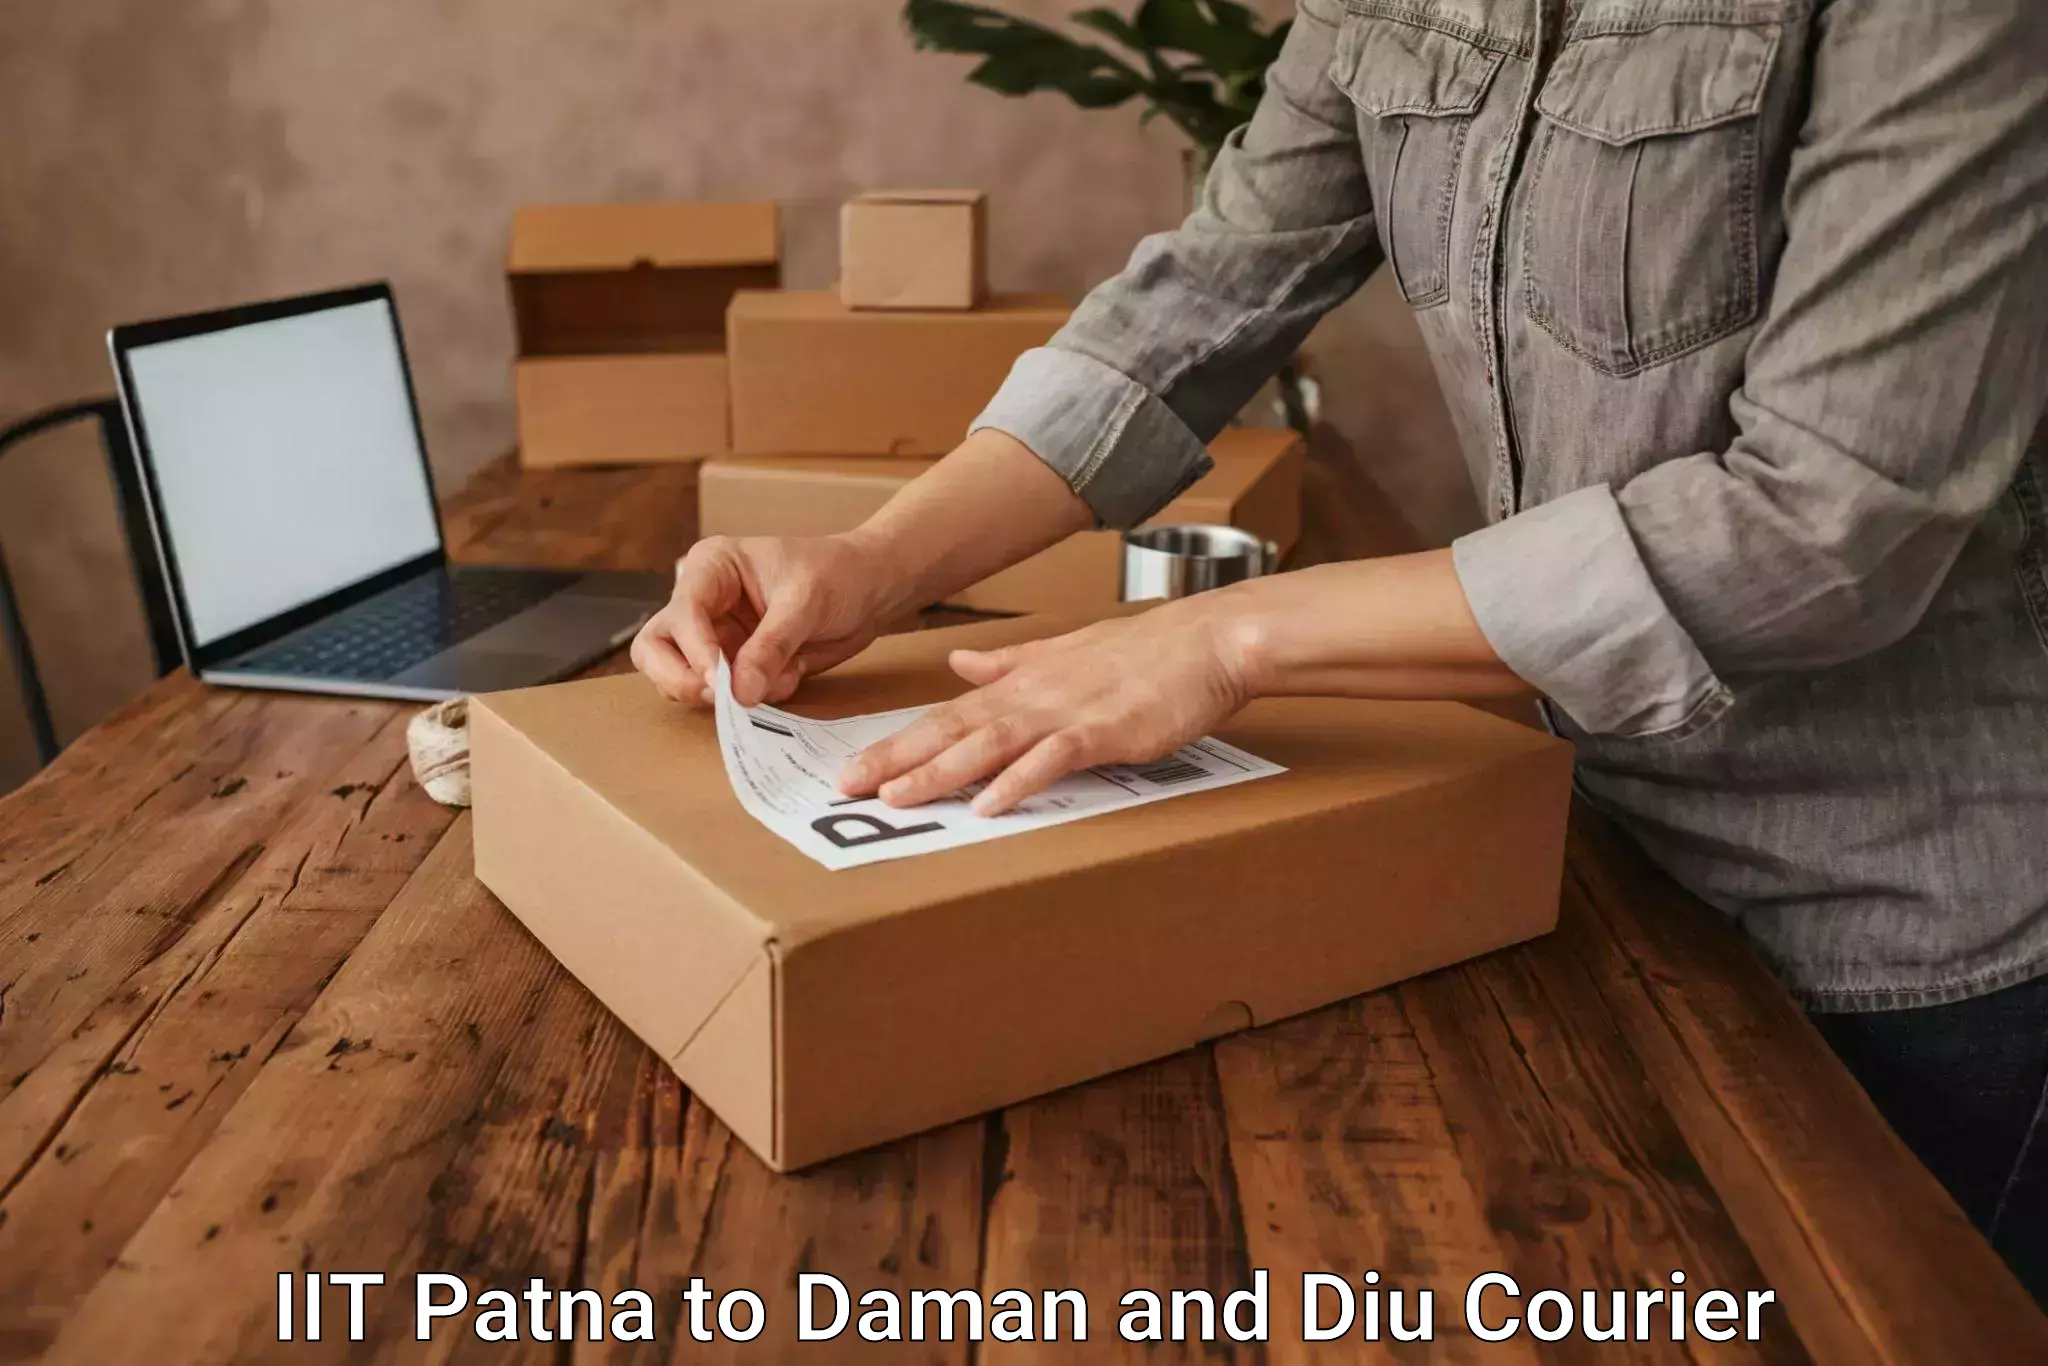 Professional moving company IIT Patna to Daman and Diu